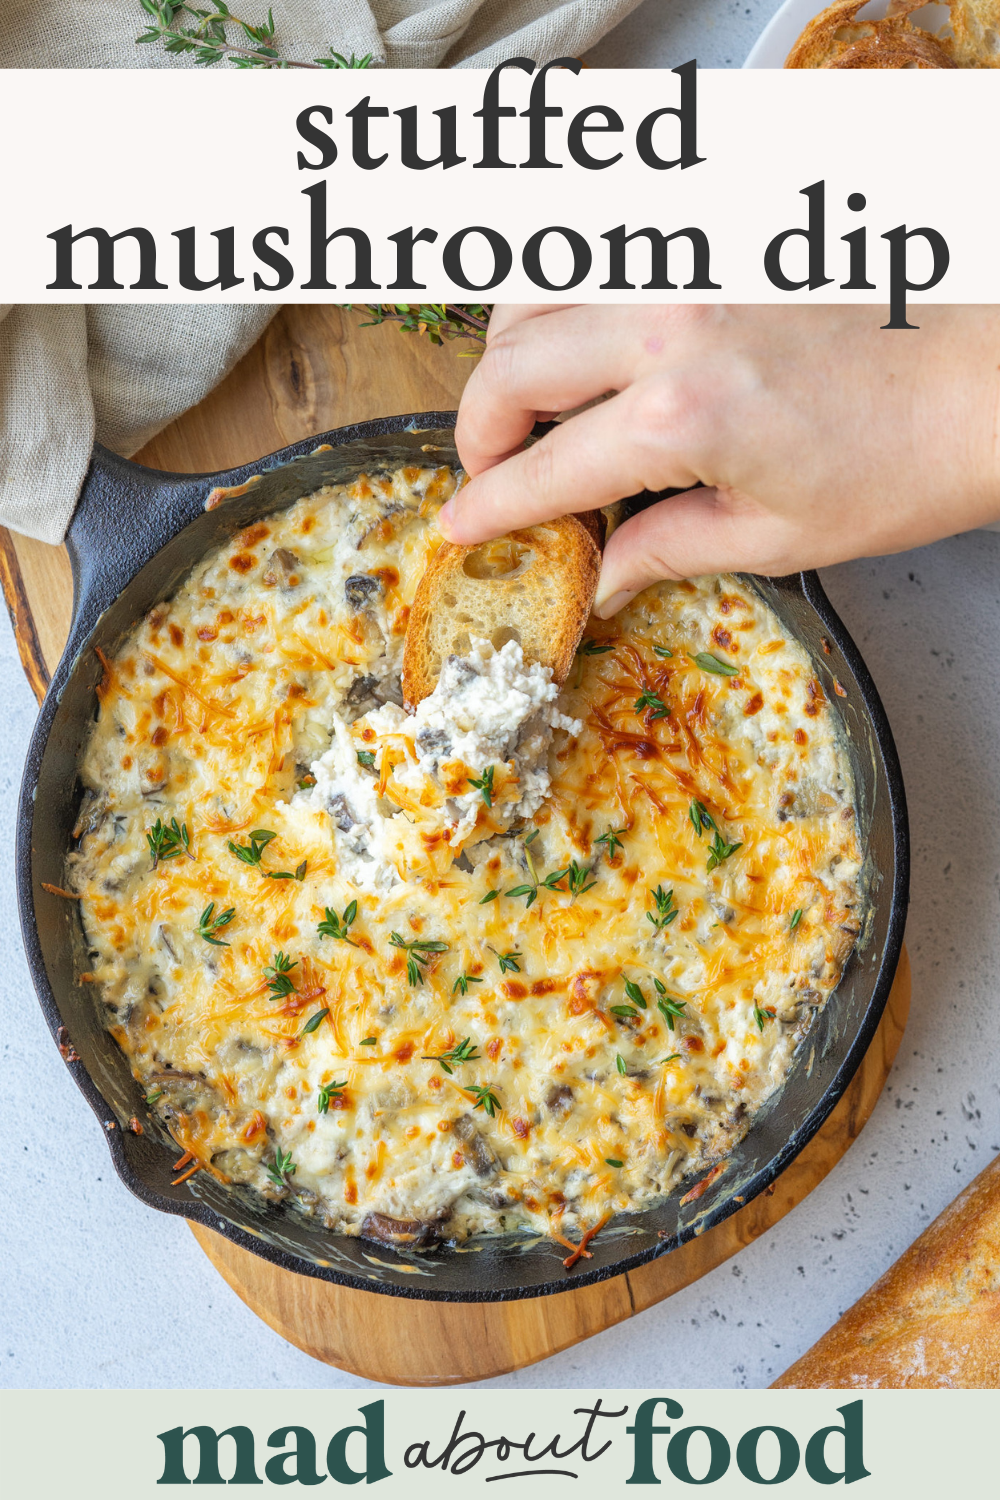 Image for pinning stuffed mushroom dip recipe on pinterest